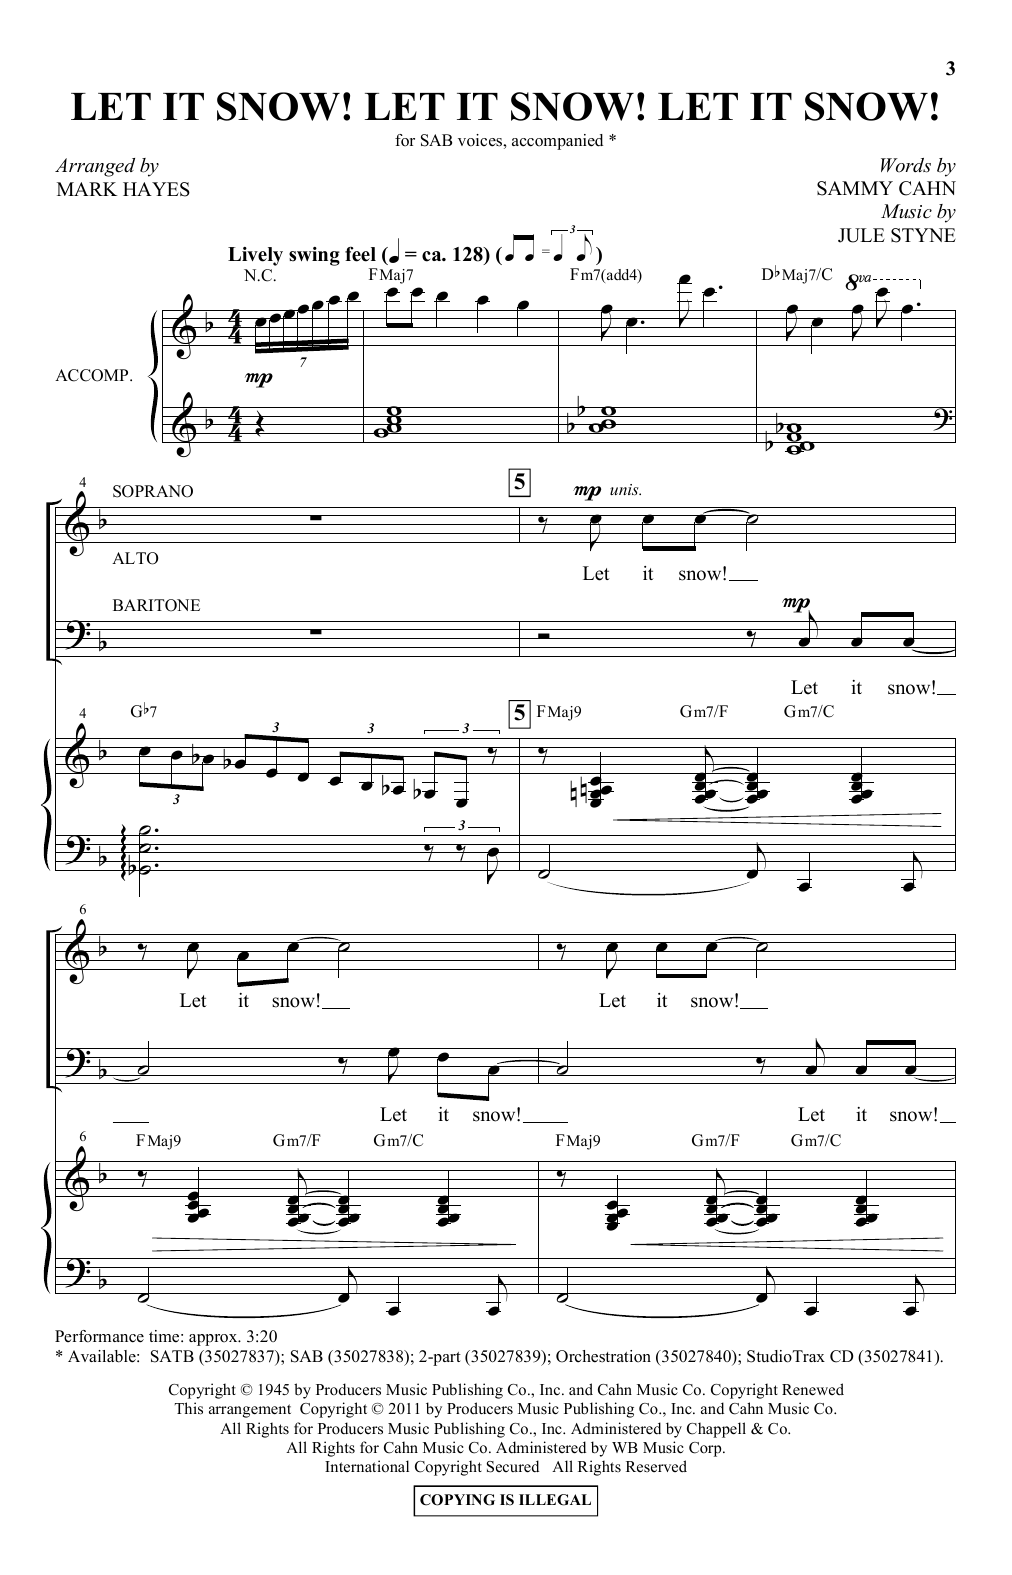 Download Sammy Cahn & Julie Styne Let It Snow! Let It Snow! Let It Snow! Sheet Music and learn how to play SATB Choir PDF digital score in minutes